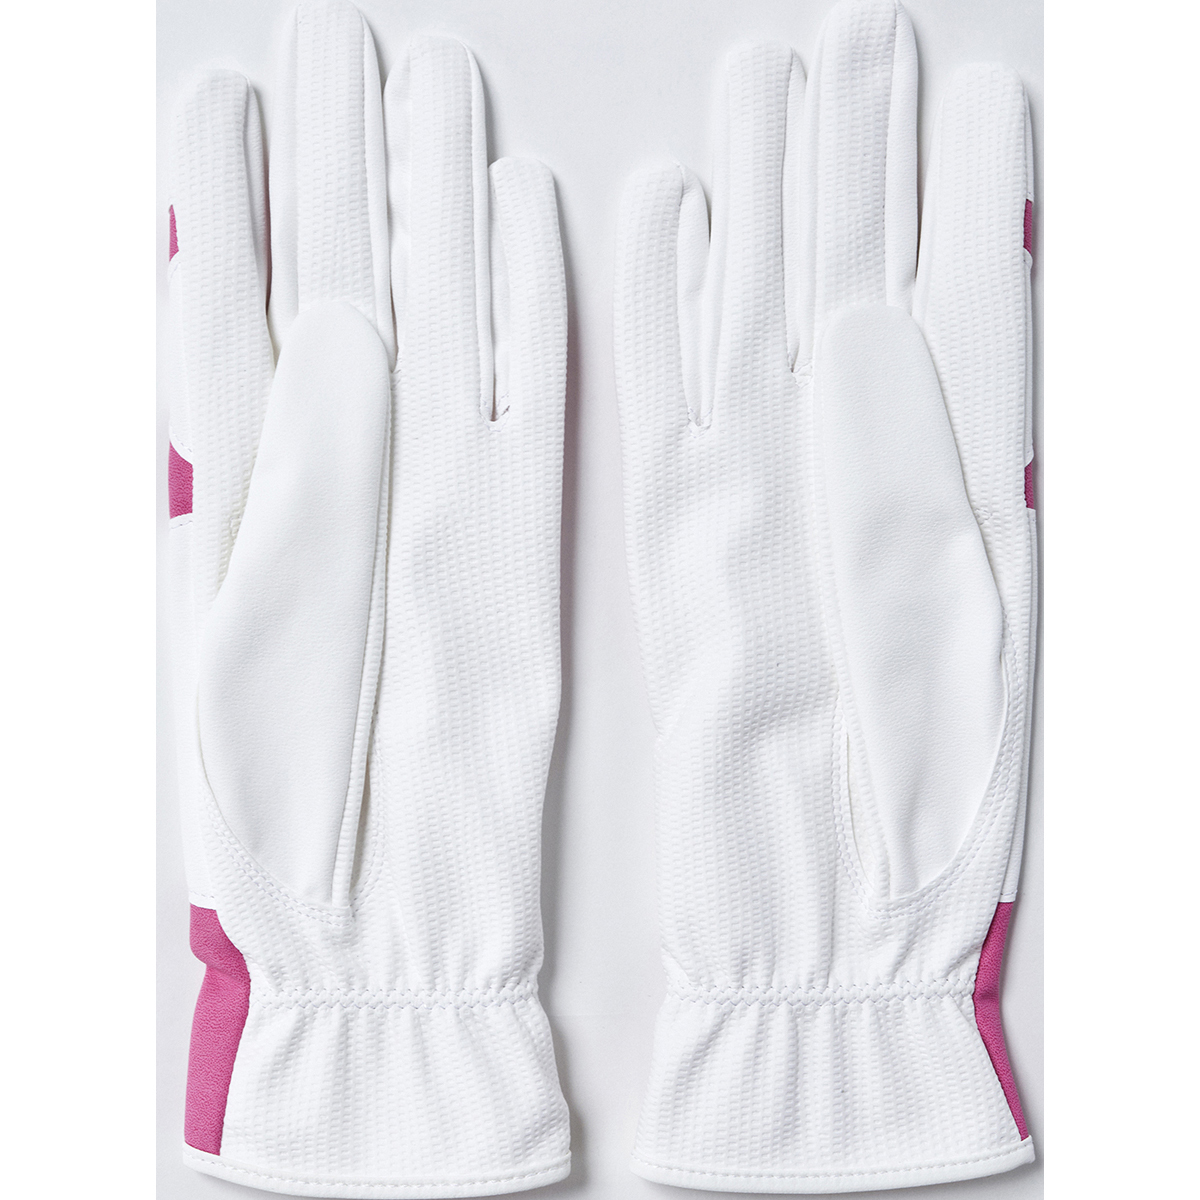 {2023 год .. модель } Le Coq женский Golf перчатка ( обе рука для ) QQCTJD00 розовый (L/20-21cm)